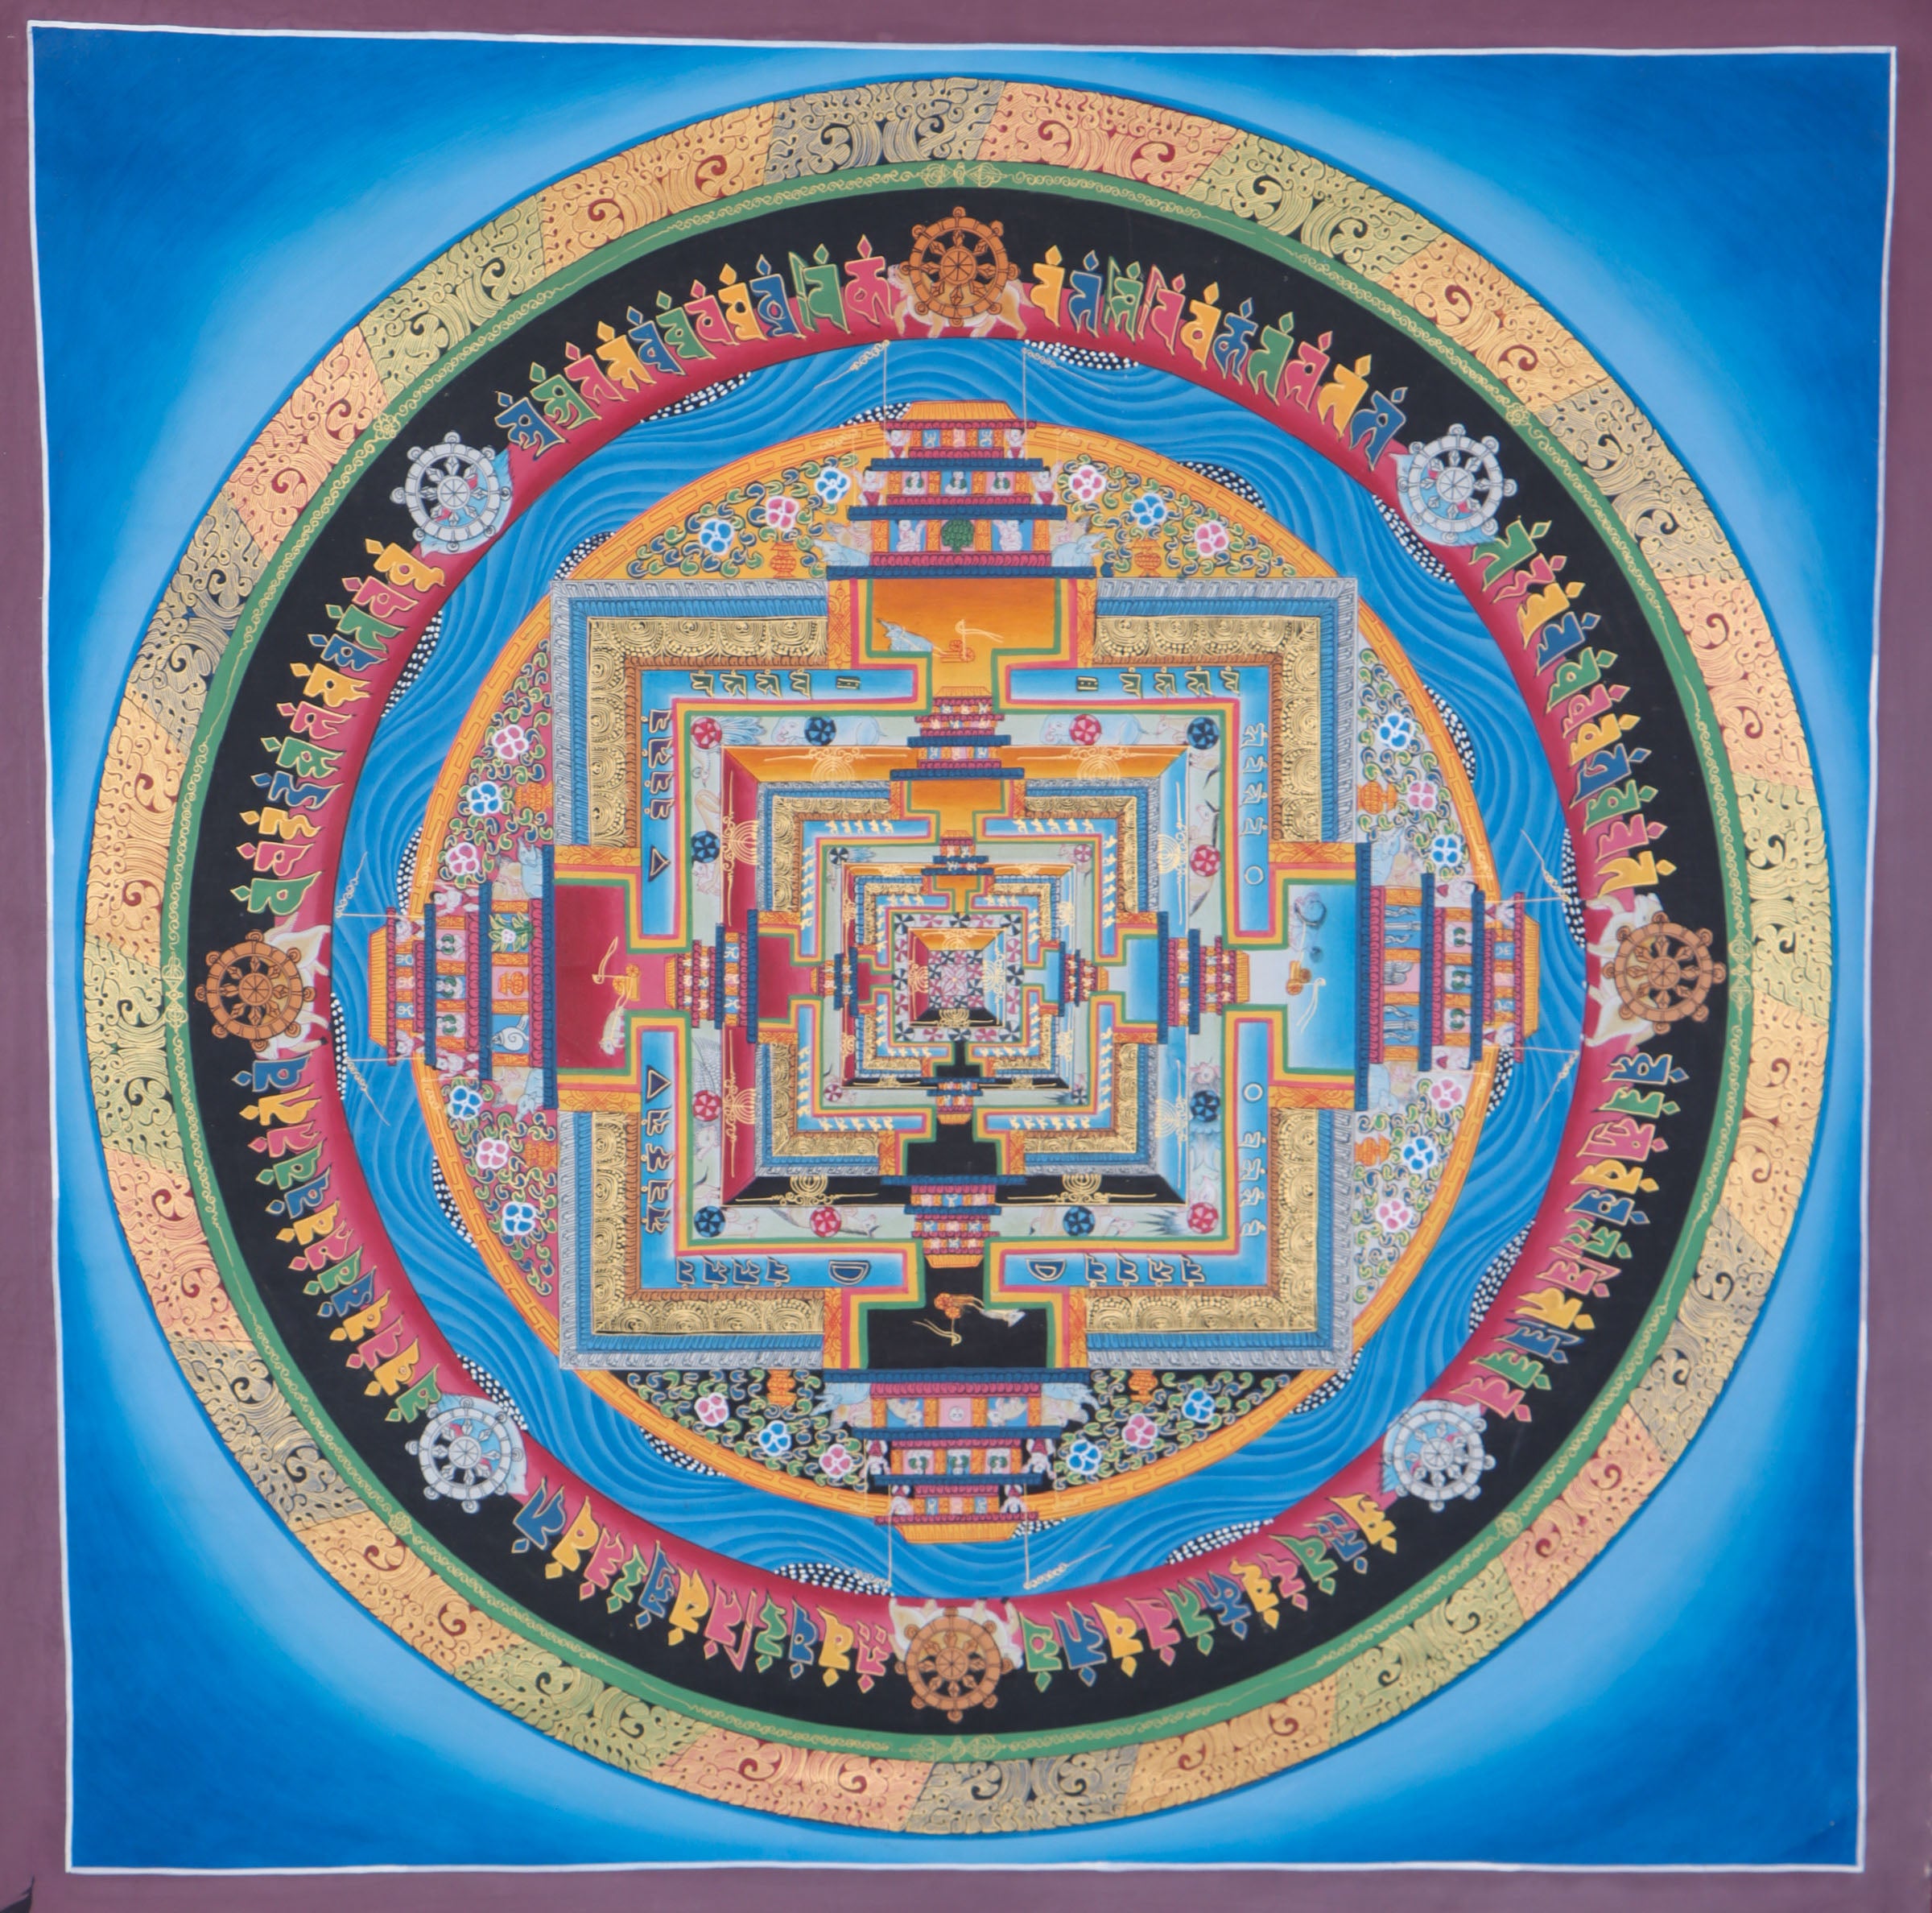 Blue Kalachakra Mandala for  meditation and enlightenment.